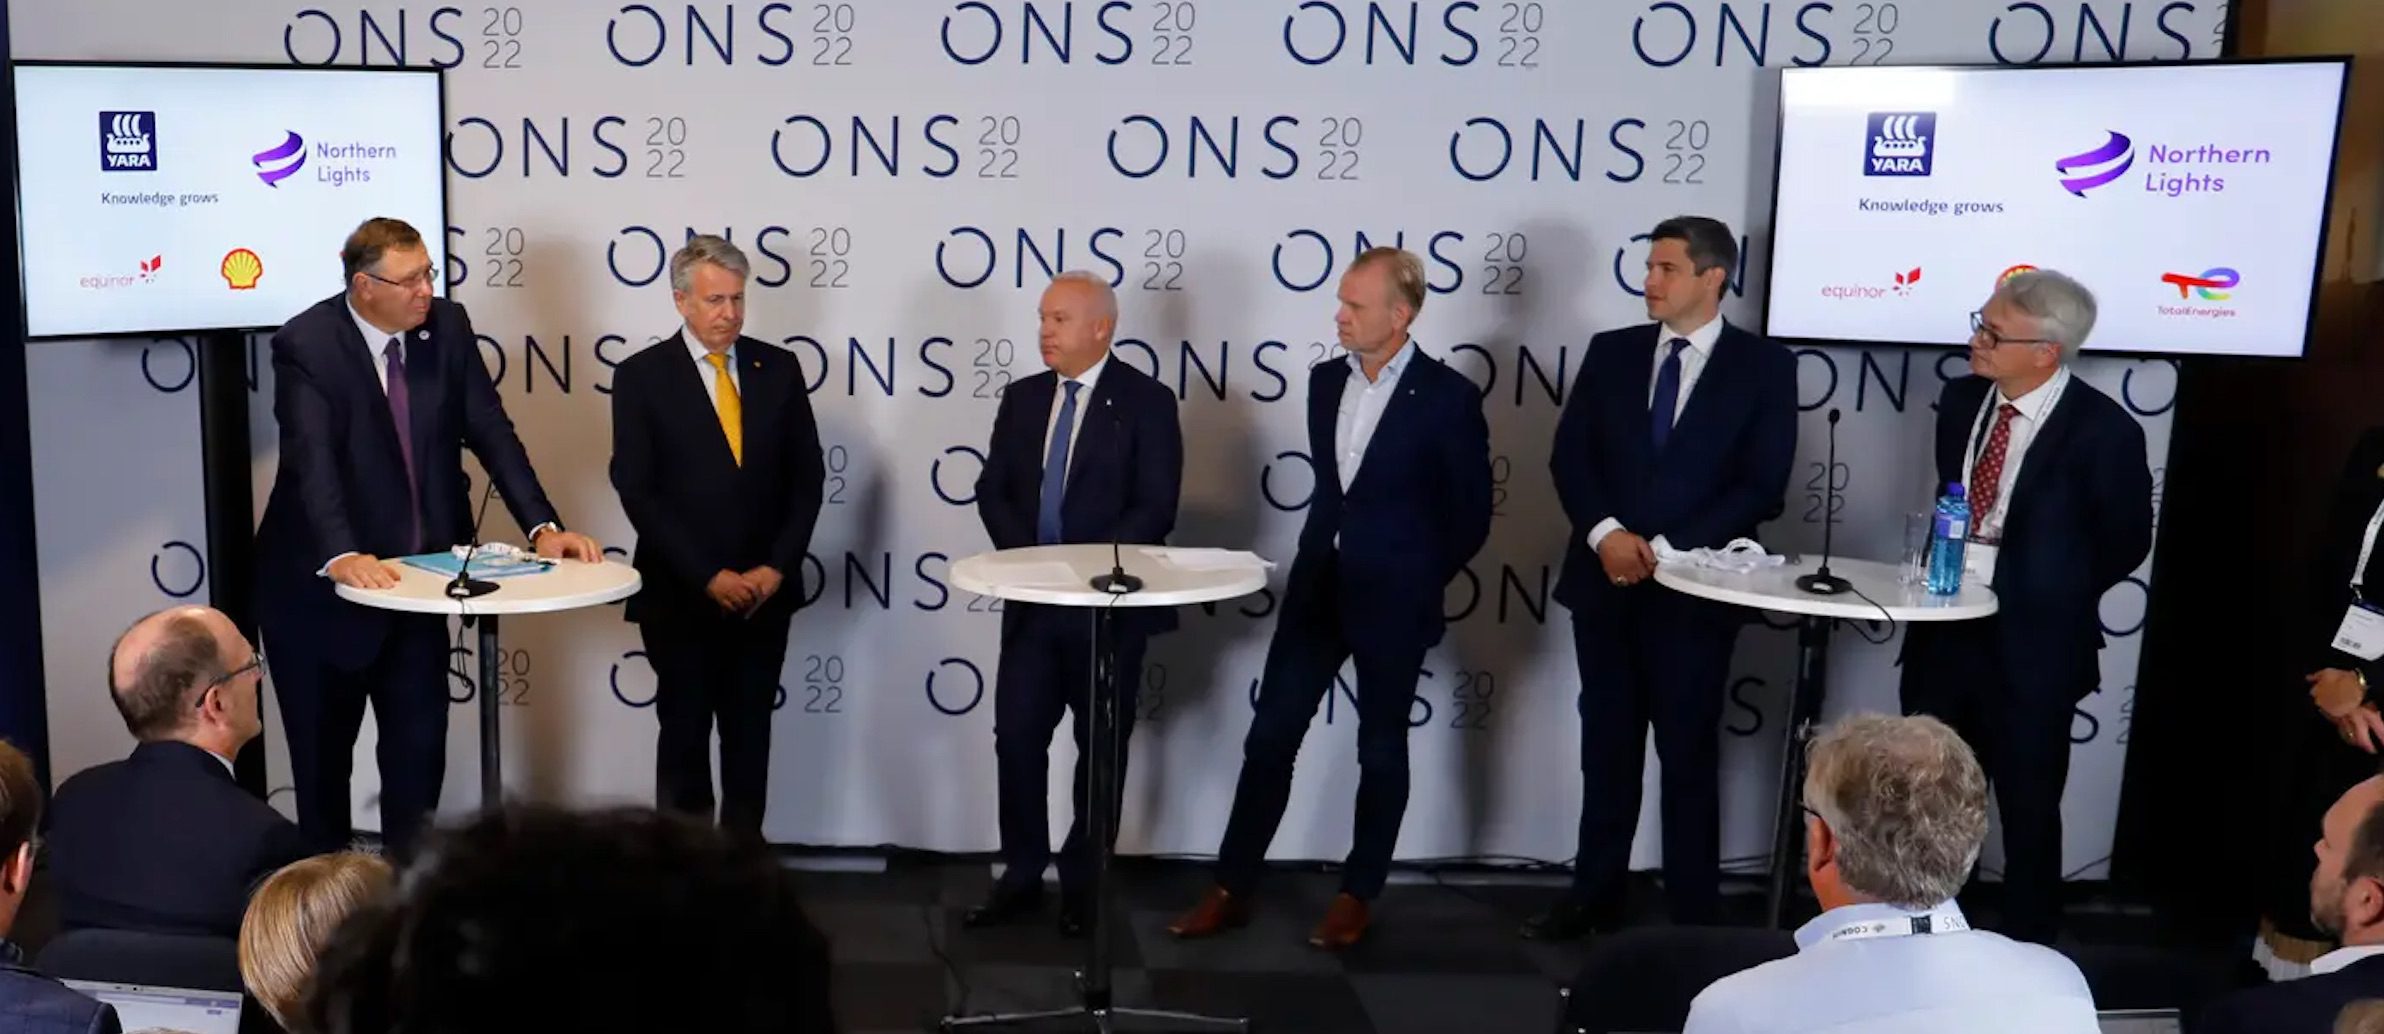 Pressekonferansen ble avholdt på ONS
(Foto: Arne Reidar Mortensen - Equinor).